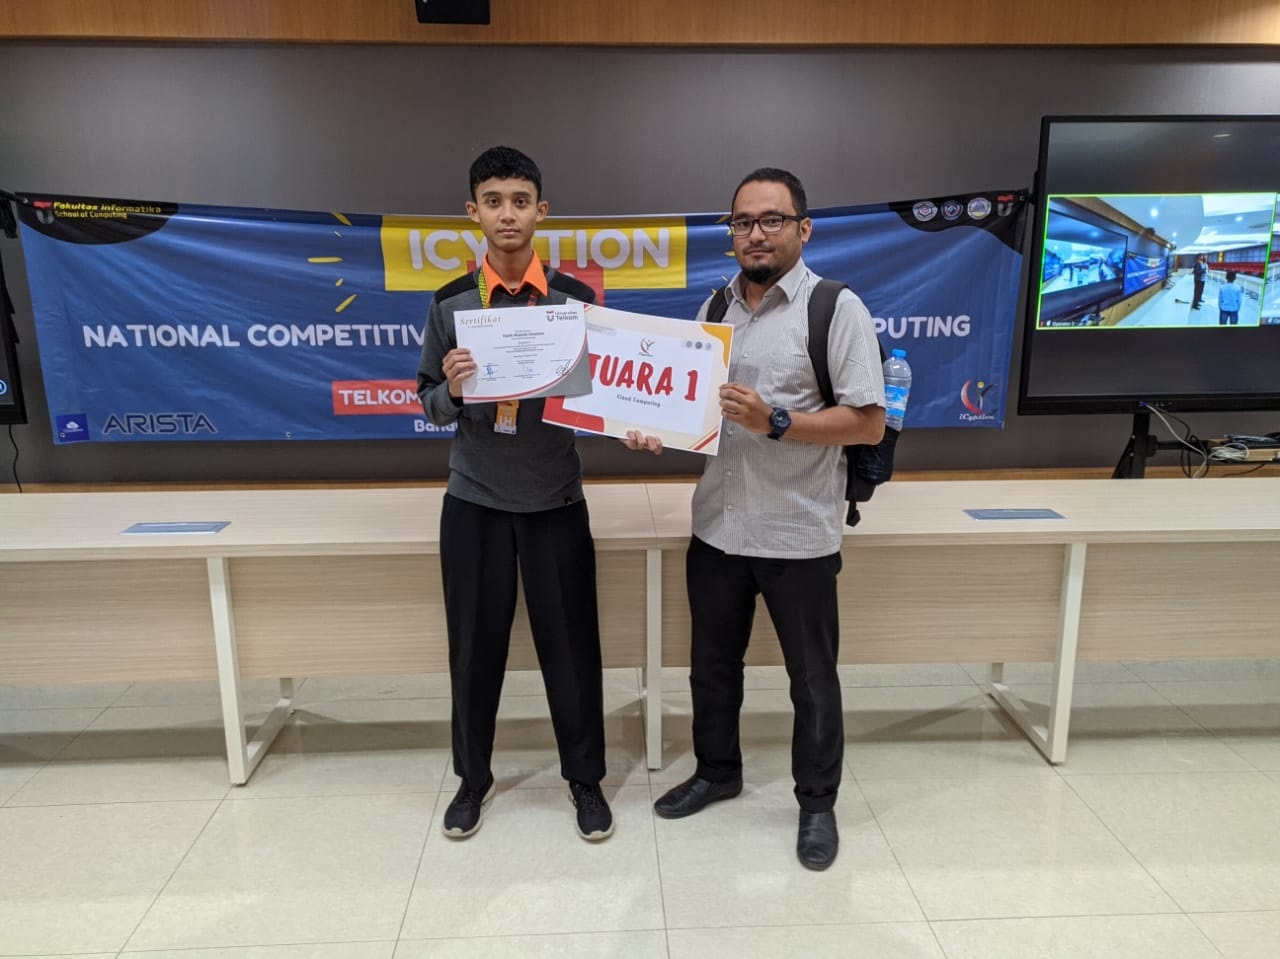 Siswa SMK Informatika Al-Irsyad Al-Islamiyyah Juara I Komputasi Awan iCyption Tingkat Nasional 